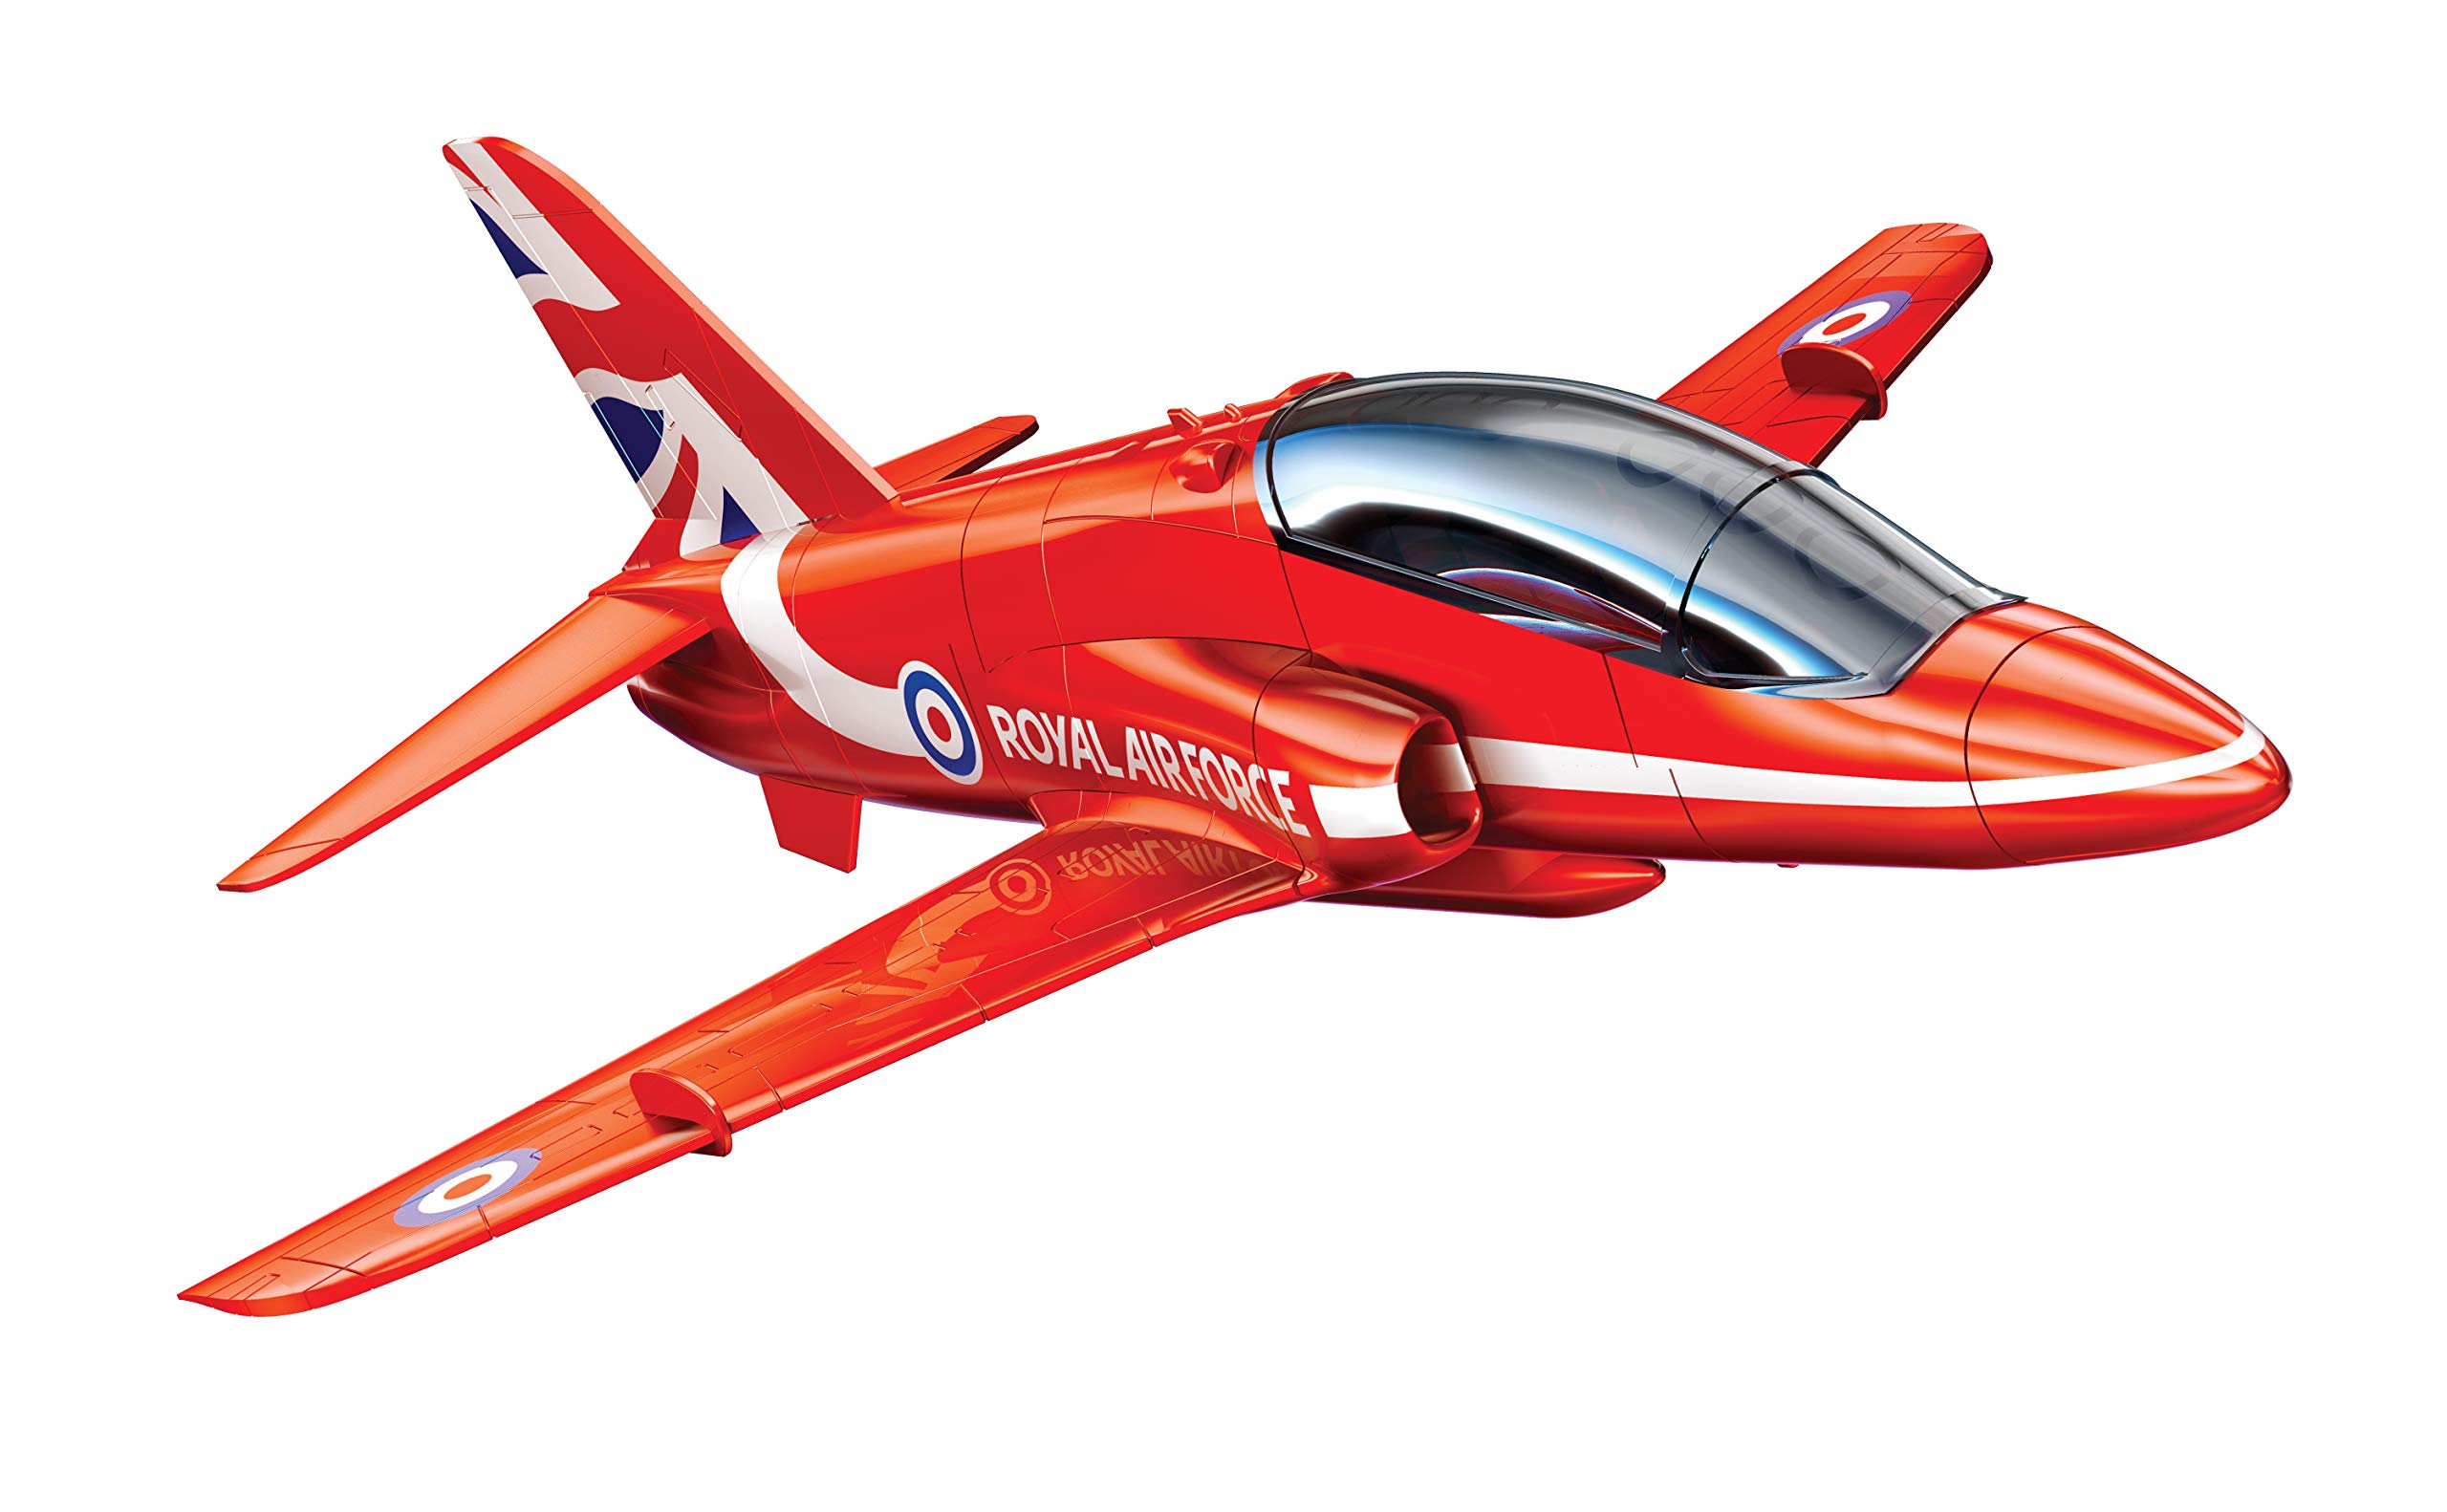 Airfix Quickbuild RAF Red Arrows Hawk Snap Together Plastic Model Kit J6018, Red & Black, 10 x 6 x 2 inches